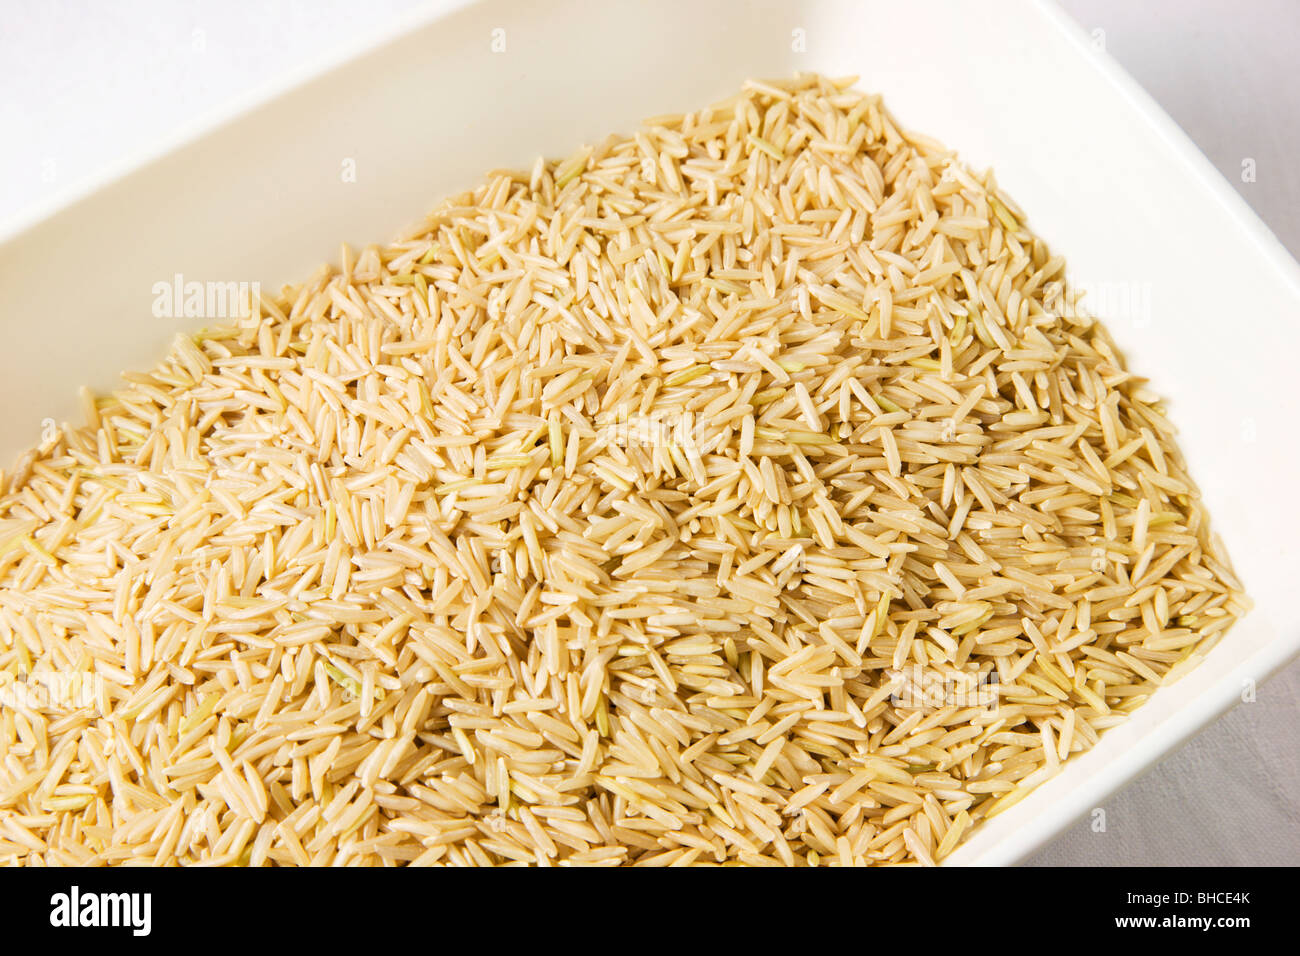 Fair Trade Organic Brown Basmati Rice in a Dish Stock Photo